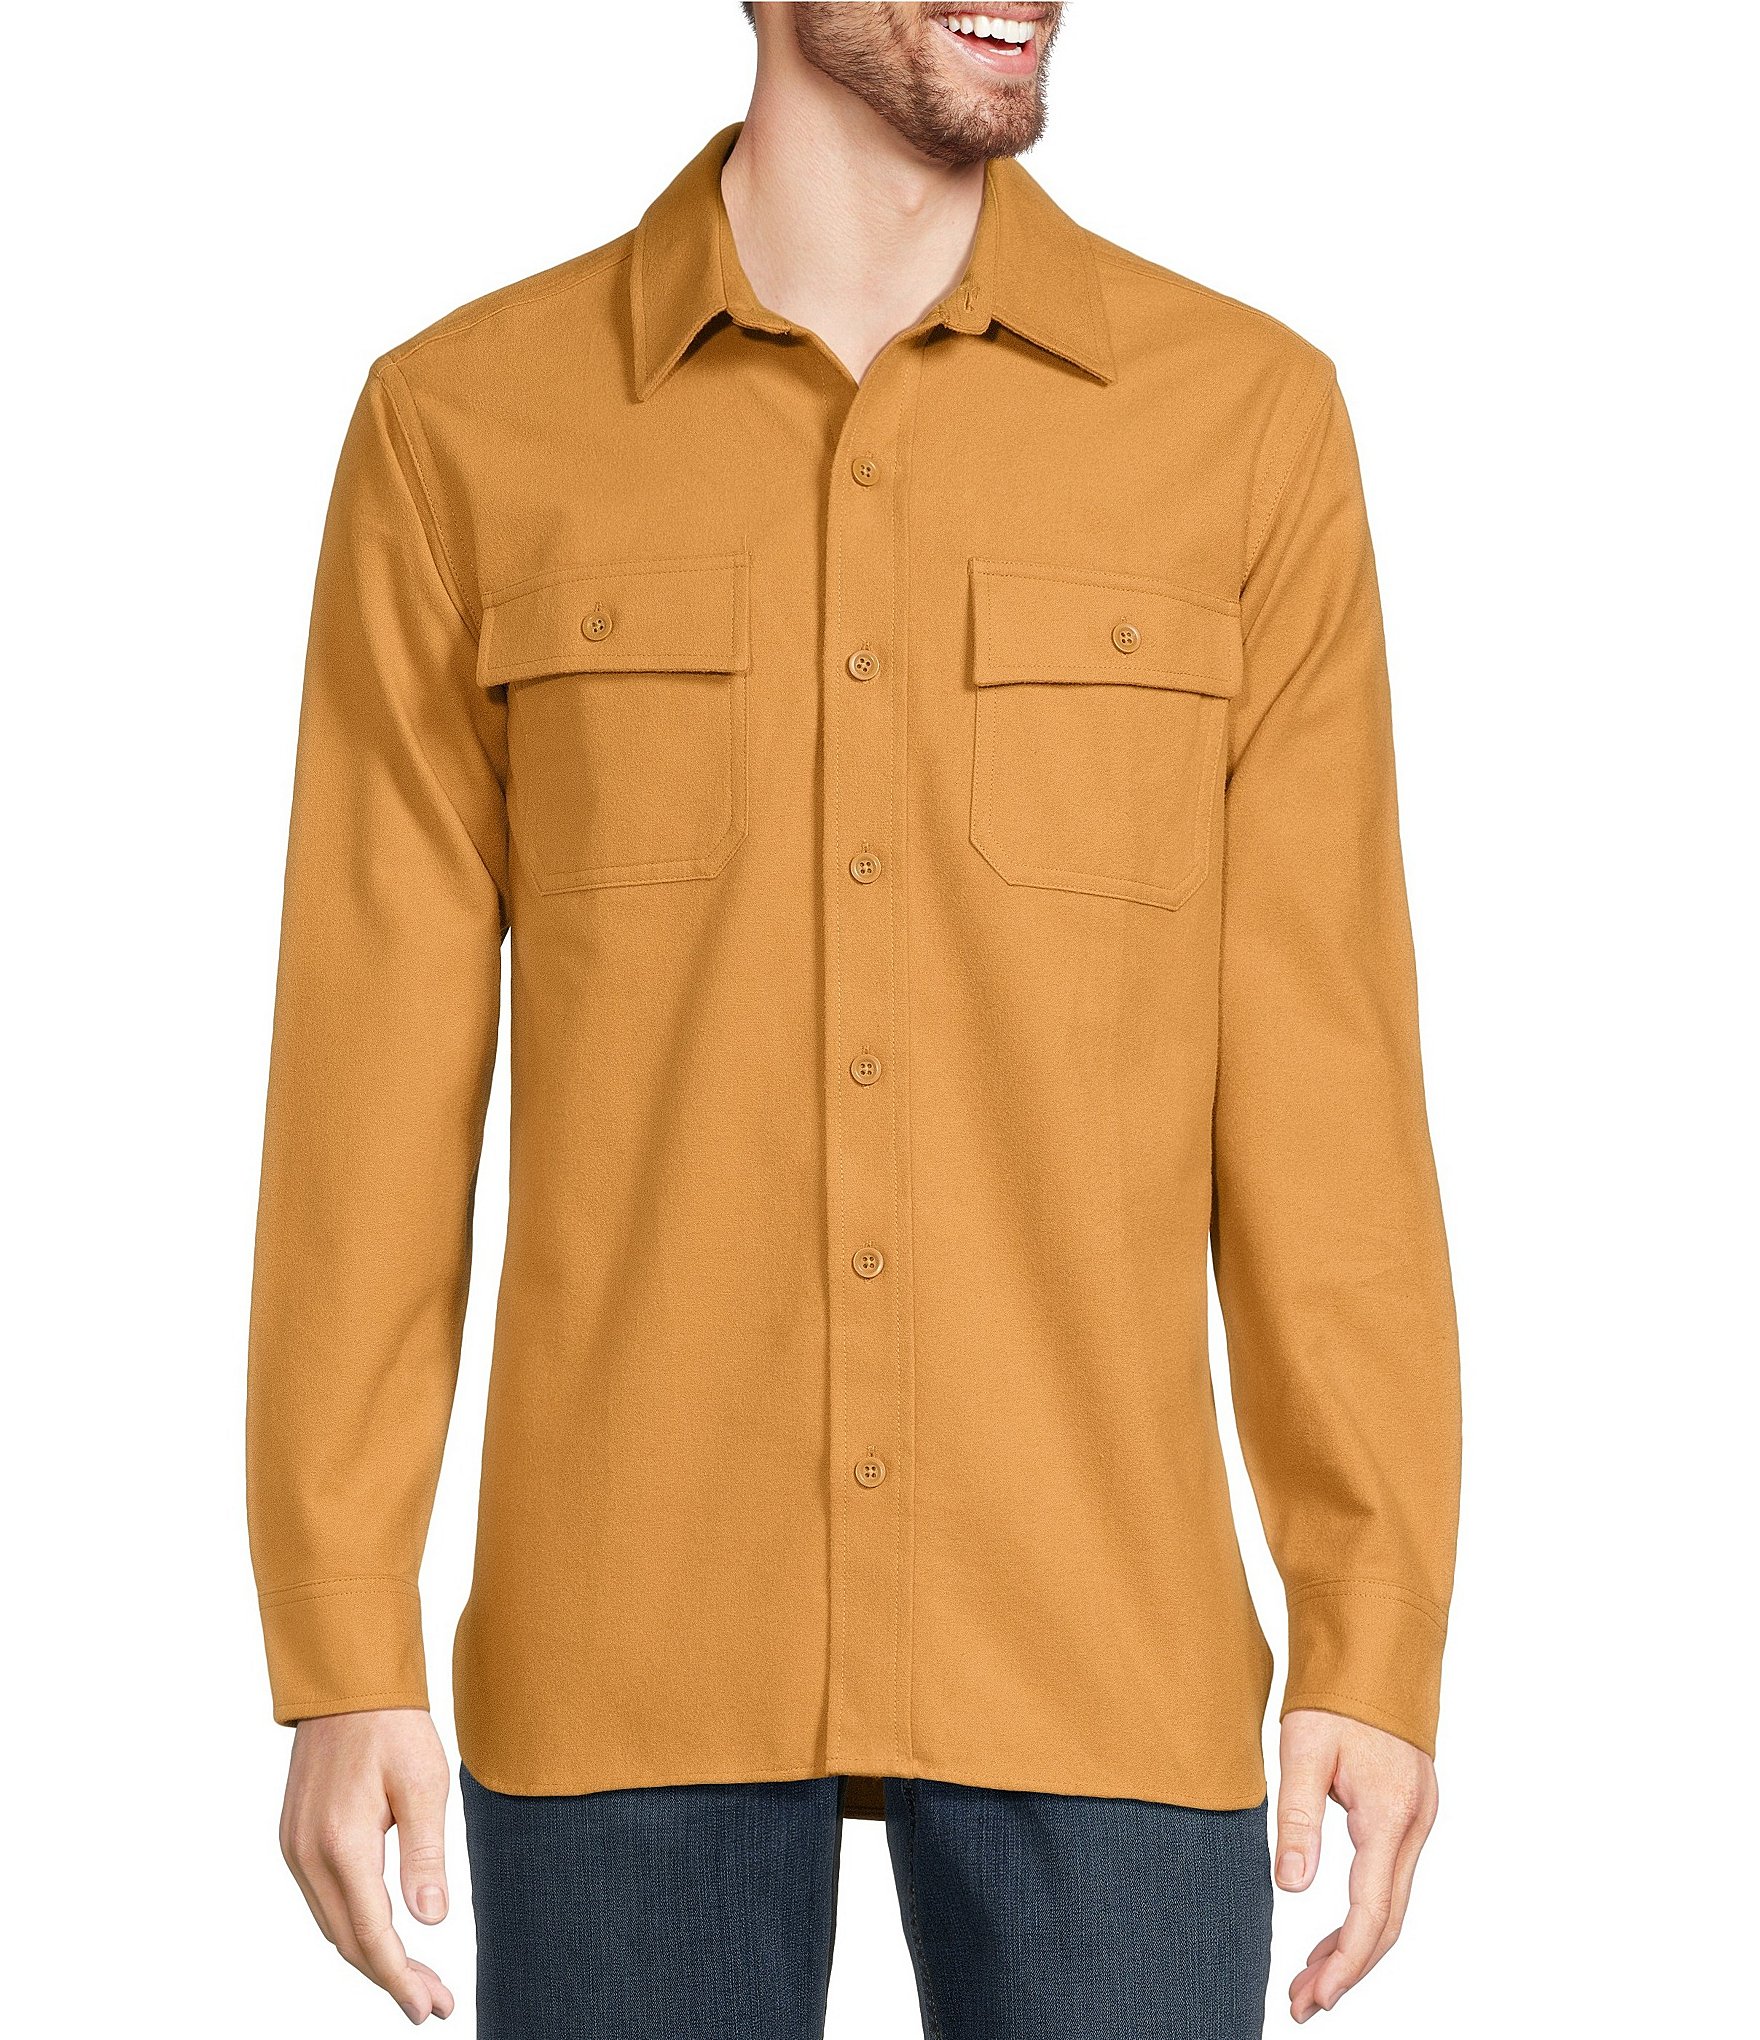 L.L. Bean, Jackets & Coats, Ll Bean Mens Xl Tall Fishing Shirt Beige  Button Down Vented Long Sleeve